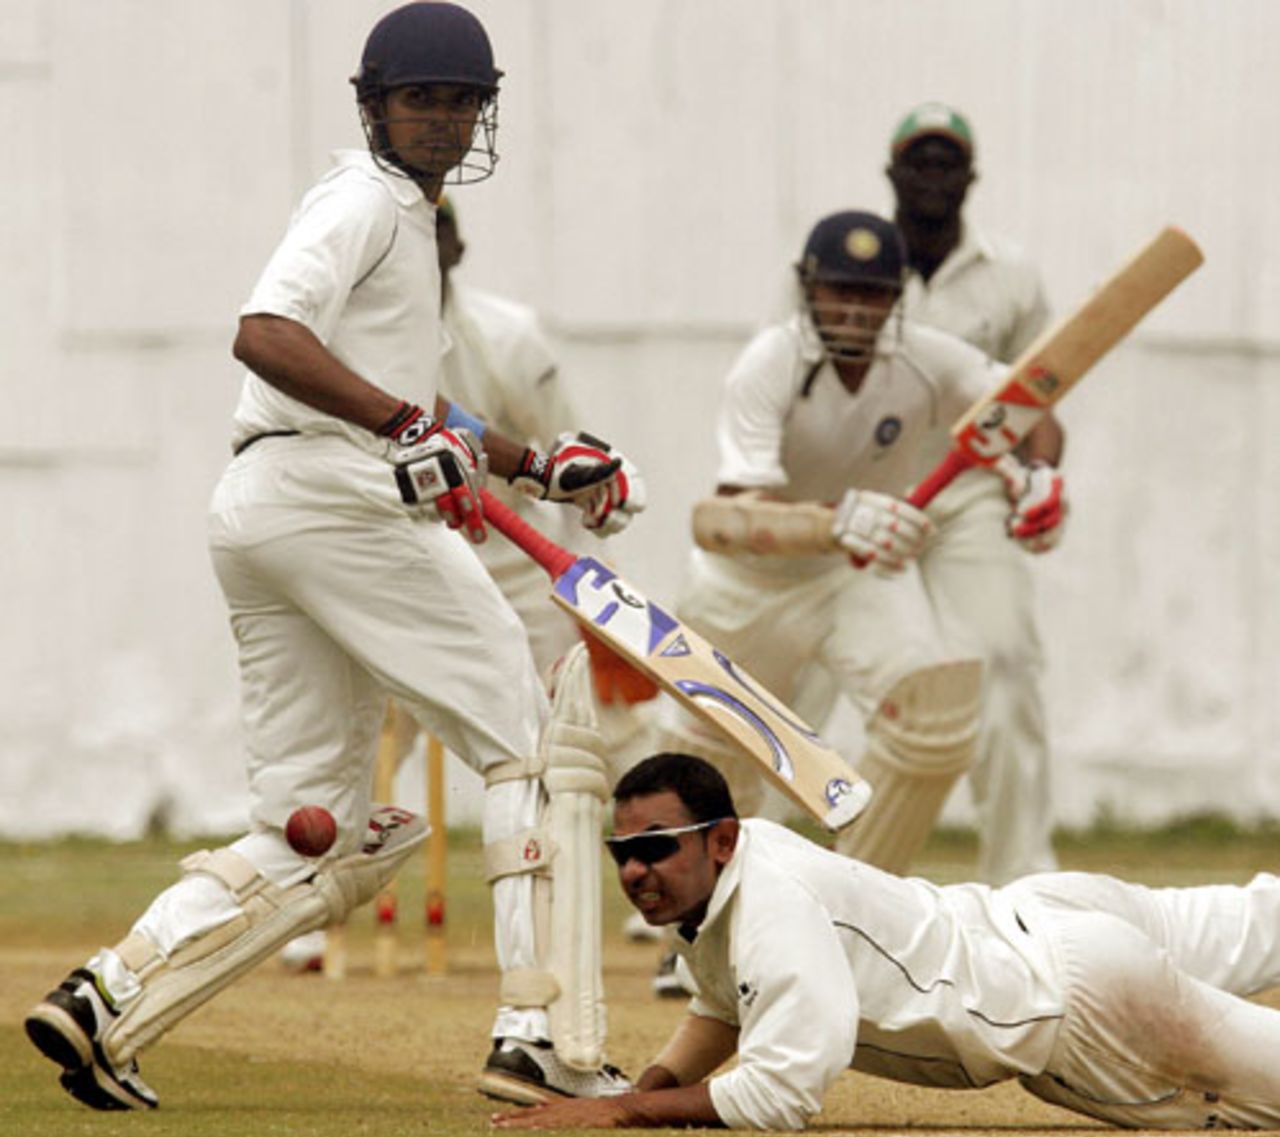 Parthiv Patel drives the ball past Hiren Varaiya as Subramaniam Badrinath looks on, Kenya v India A, Mombasa, 2nd day, August 11, 2007